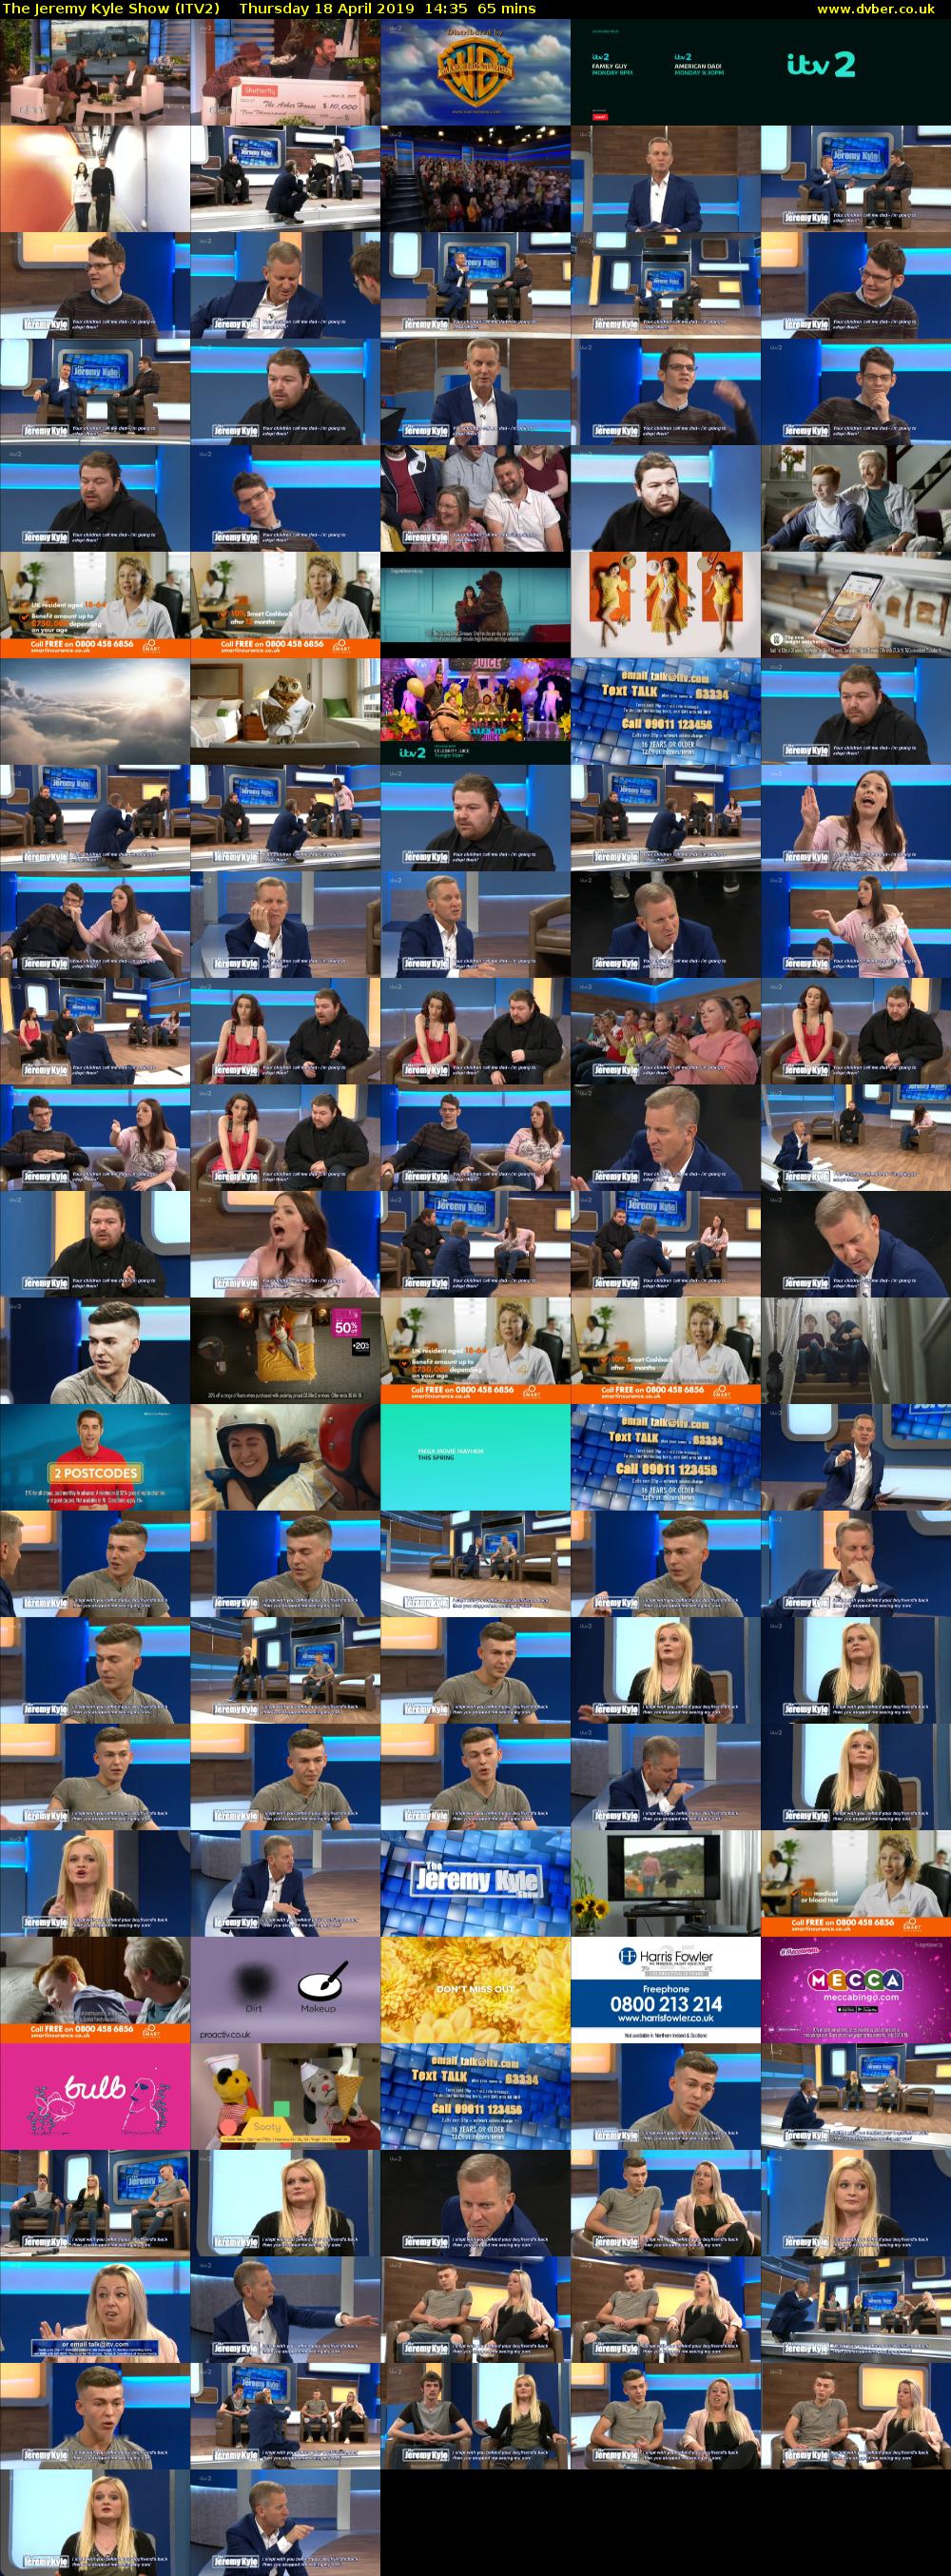 The Jeremy Kyle Show (ITV2) Thursday 18 April 2019 14:35 - 15:40